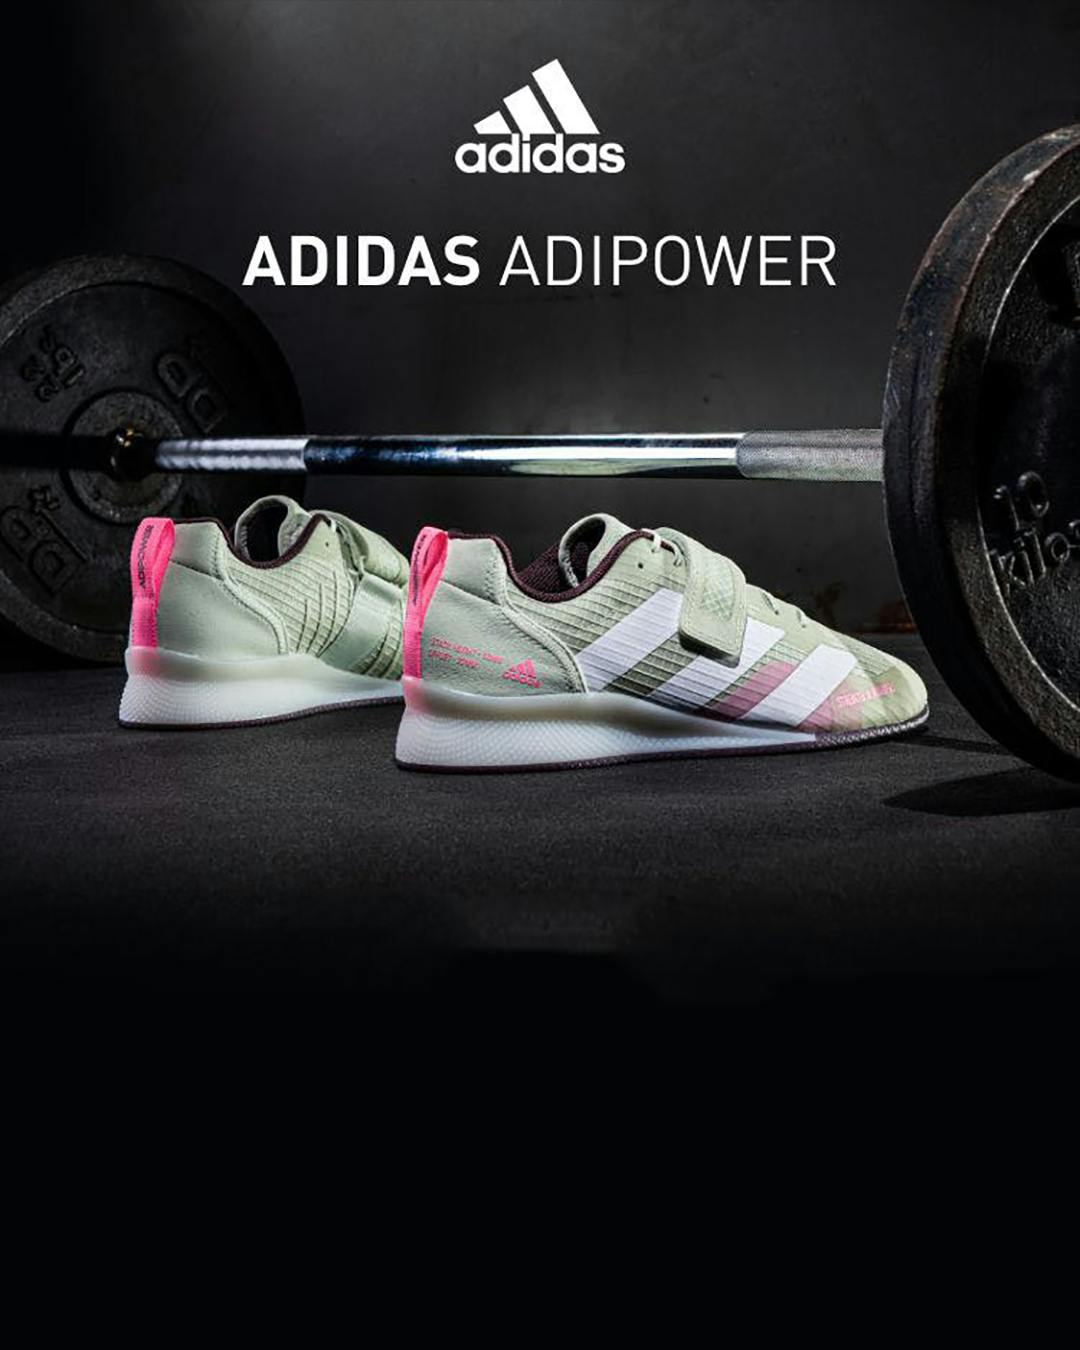 Adidas Adipower